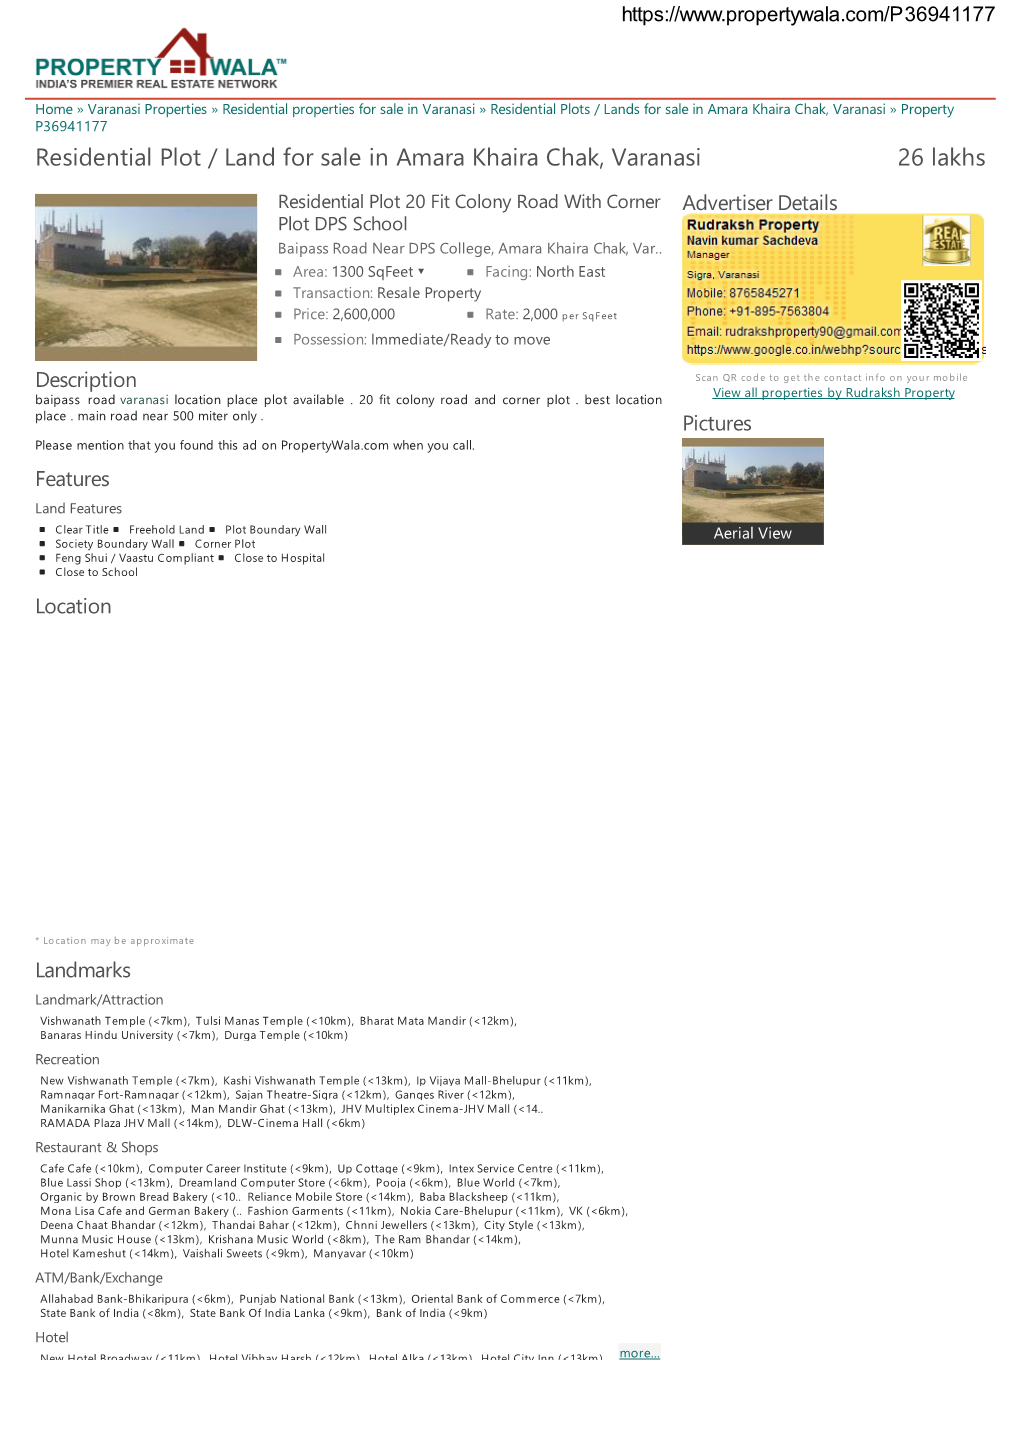 Residential Plot / Land for Sale in Amara Khaira Chak, Varanasi (P36941177)